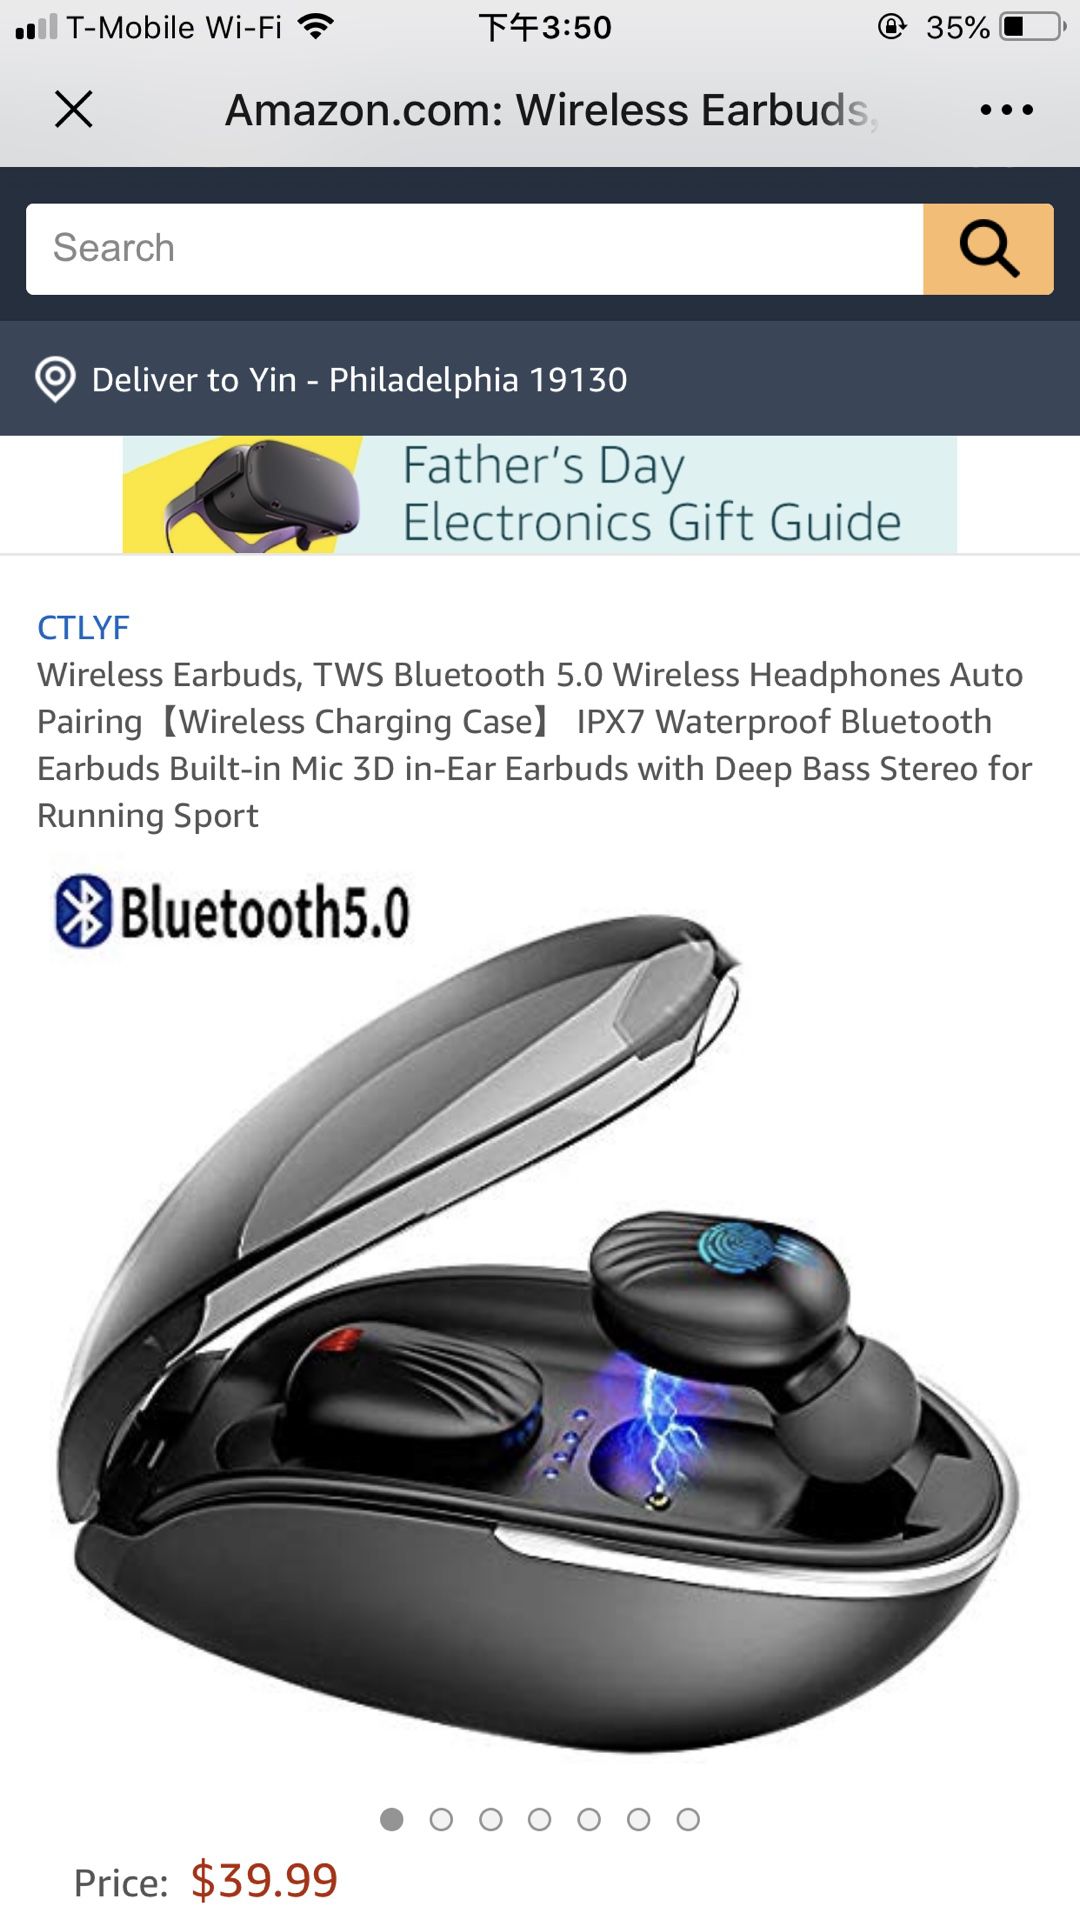 Wireless Earbuds, TWS Bluetooth 5.0 Wireless Headphones Auto Pairing【Wireless Charging Case】 IPX7 Waterproof Bluetooth Earbuds Built-in Mic 3D in-Ear